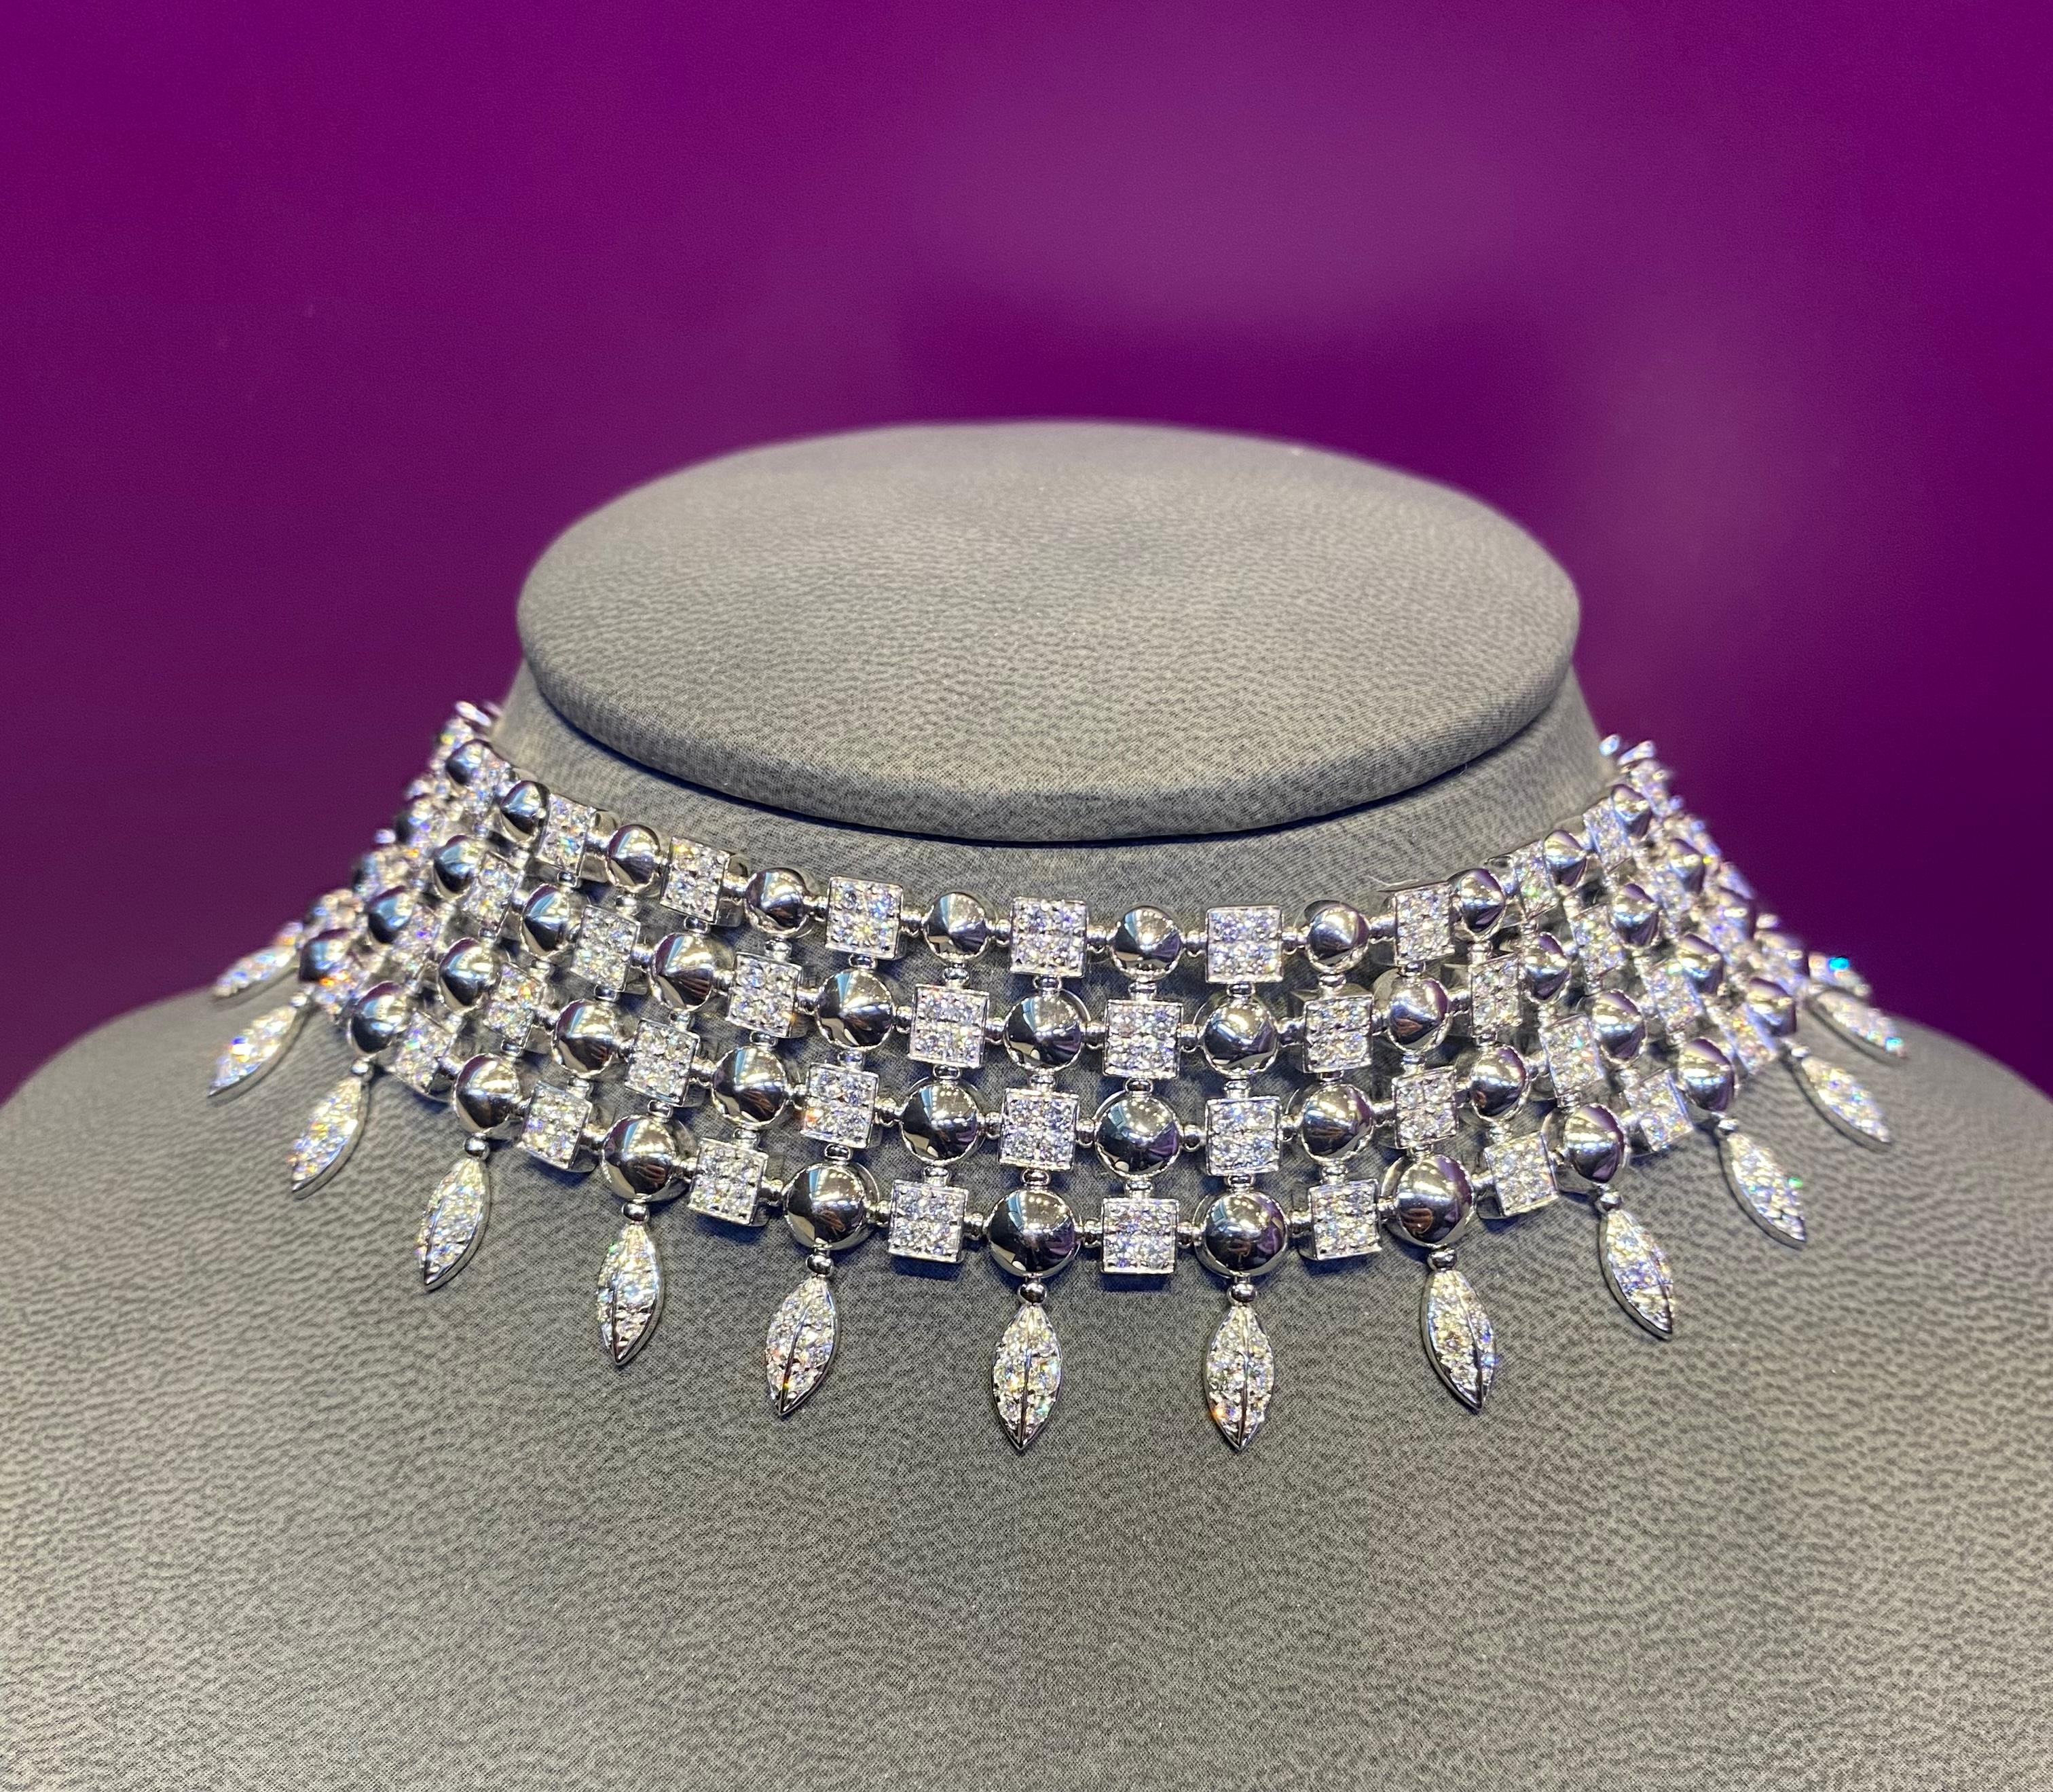 Bulgari Diamond Choker Necklace.

A choker featuring 4 rows of pave diamond links set in 18 karat white gold round 

Measurements: 13.5